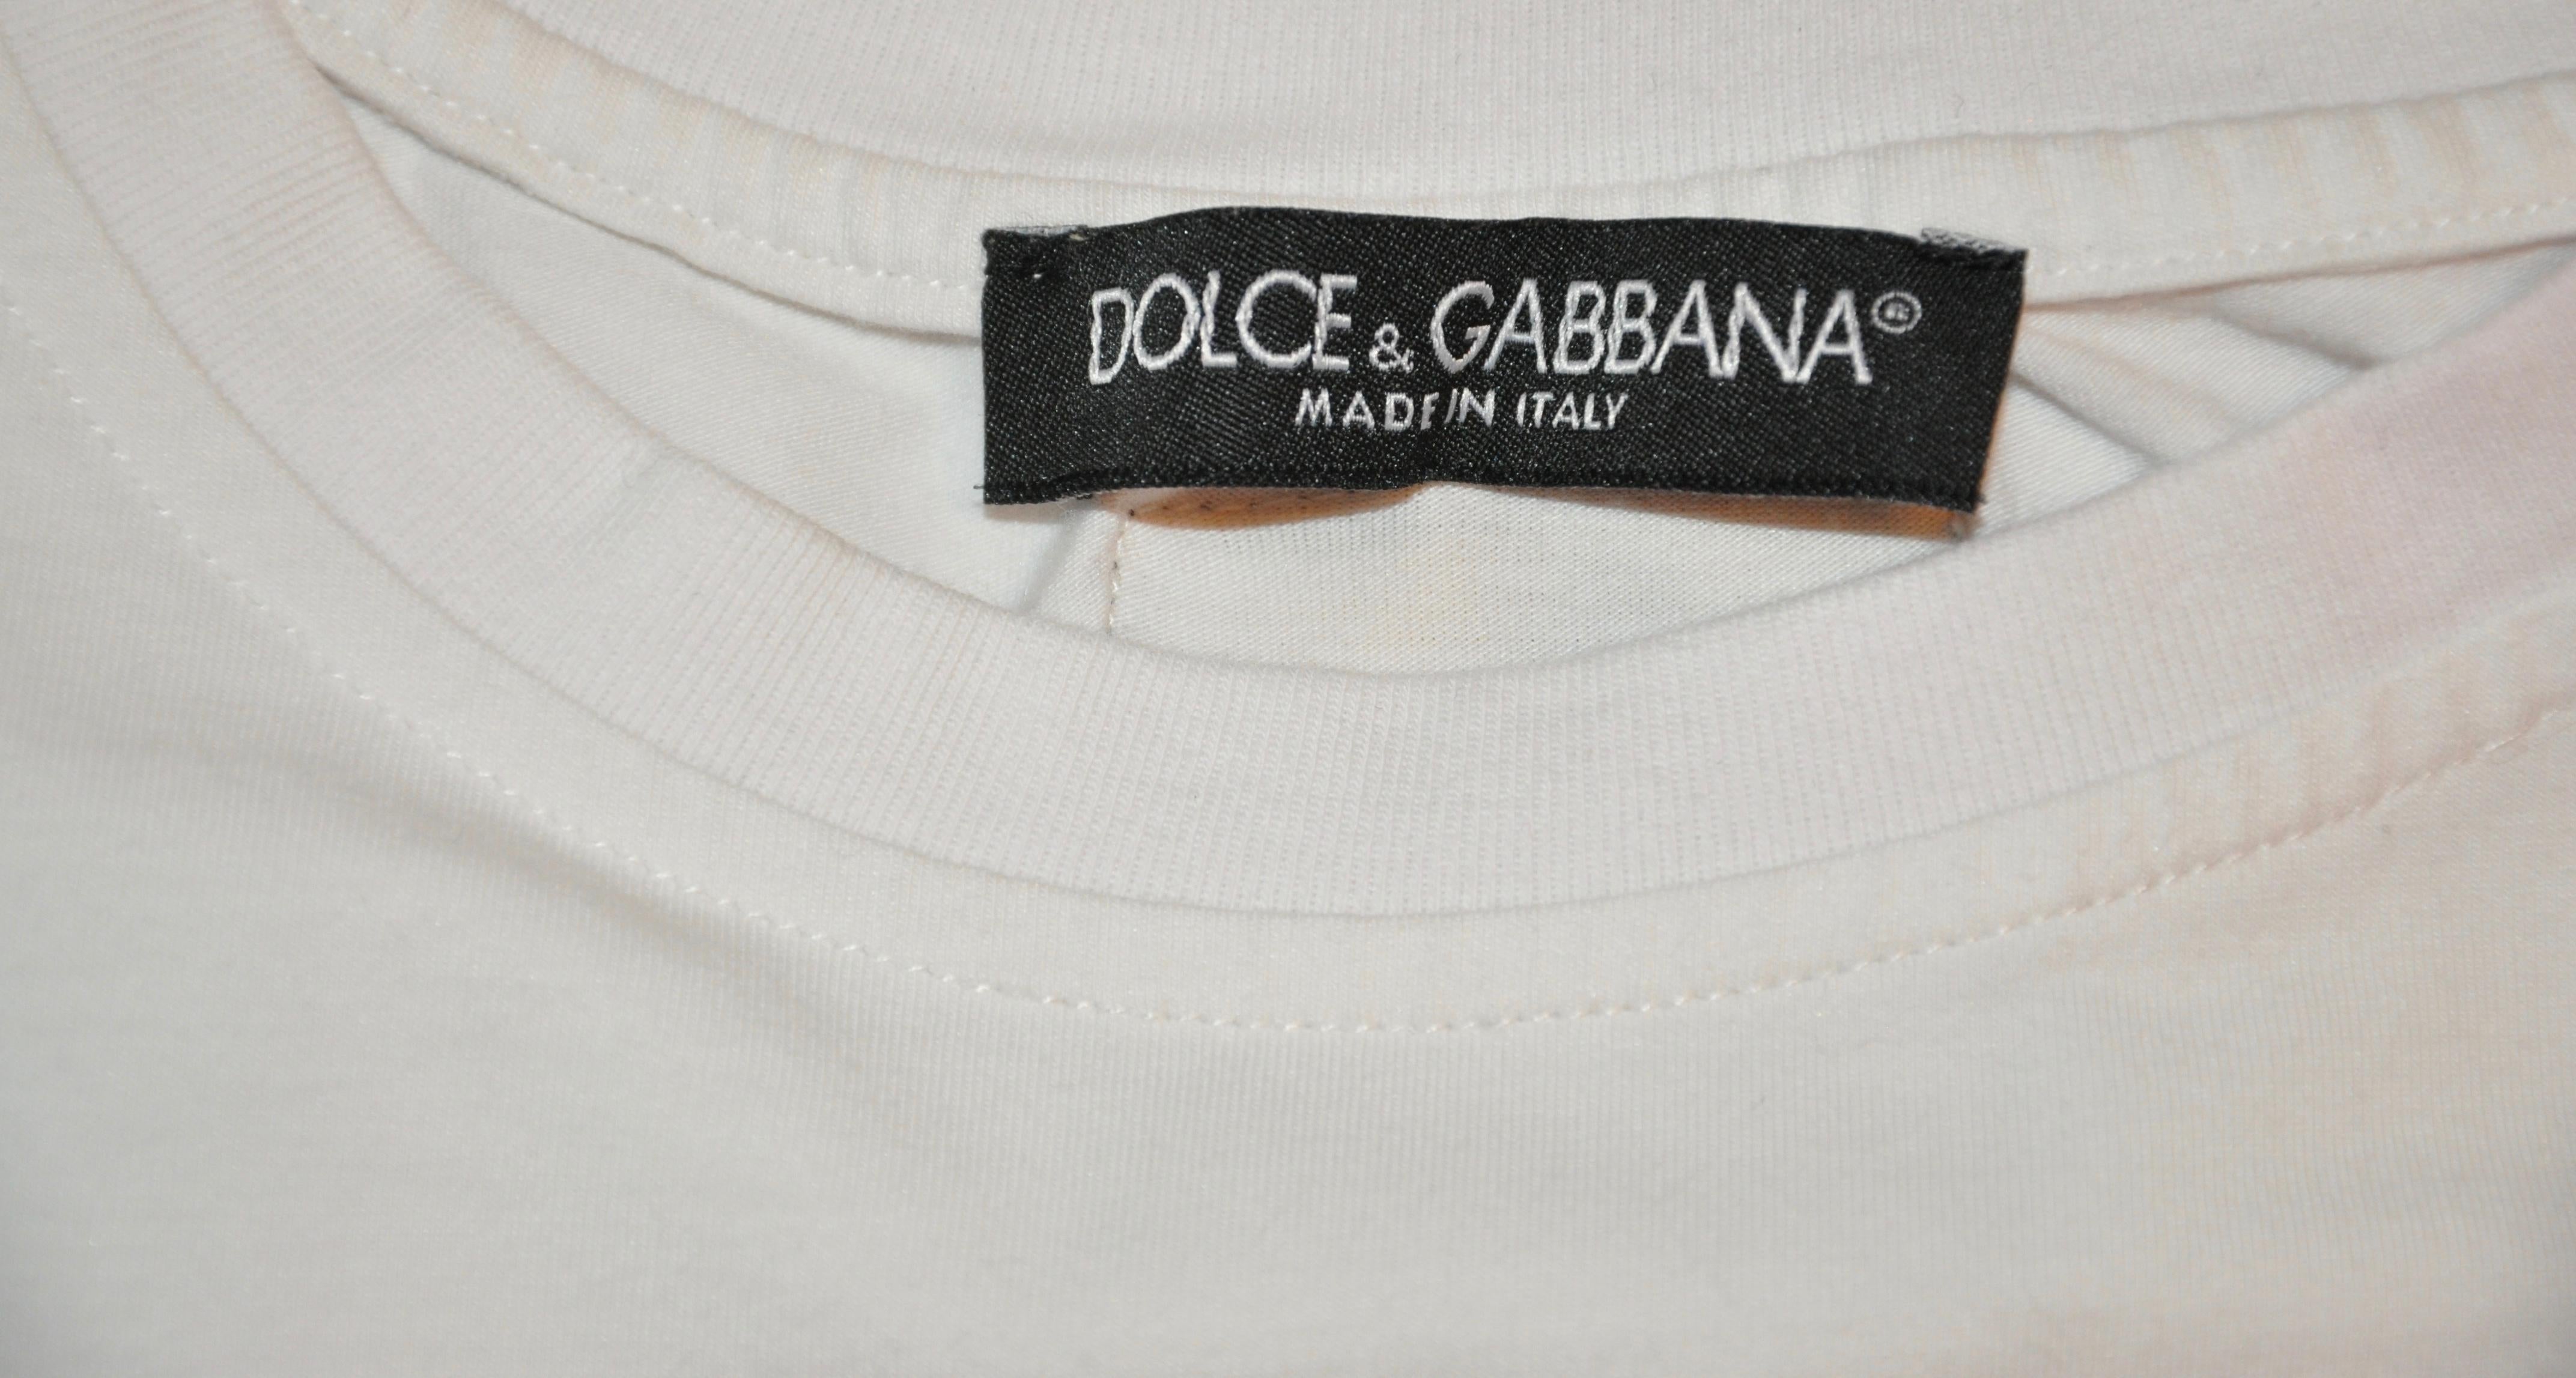 Dolce & Gabbana wonderfully whimsical and comical 